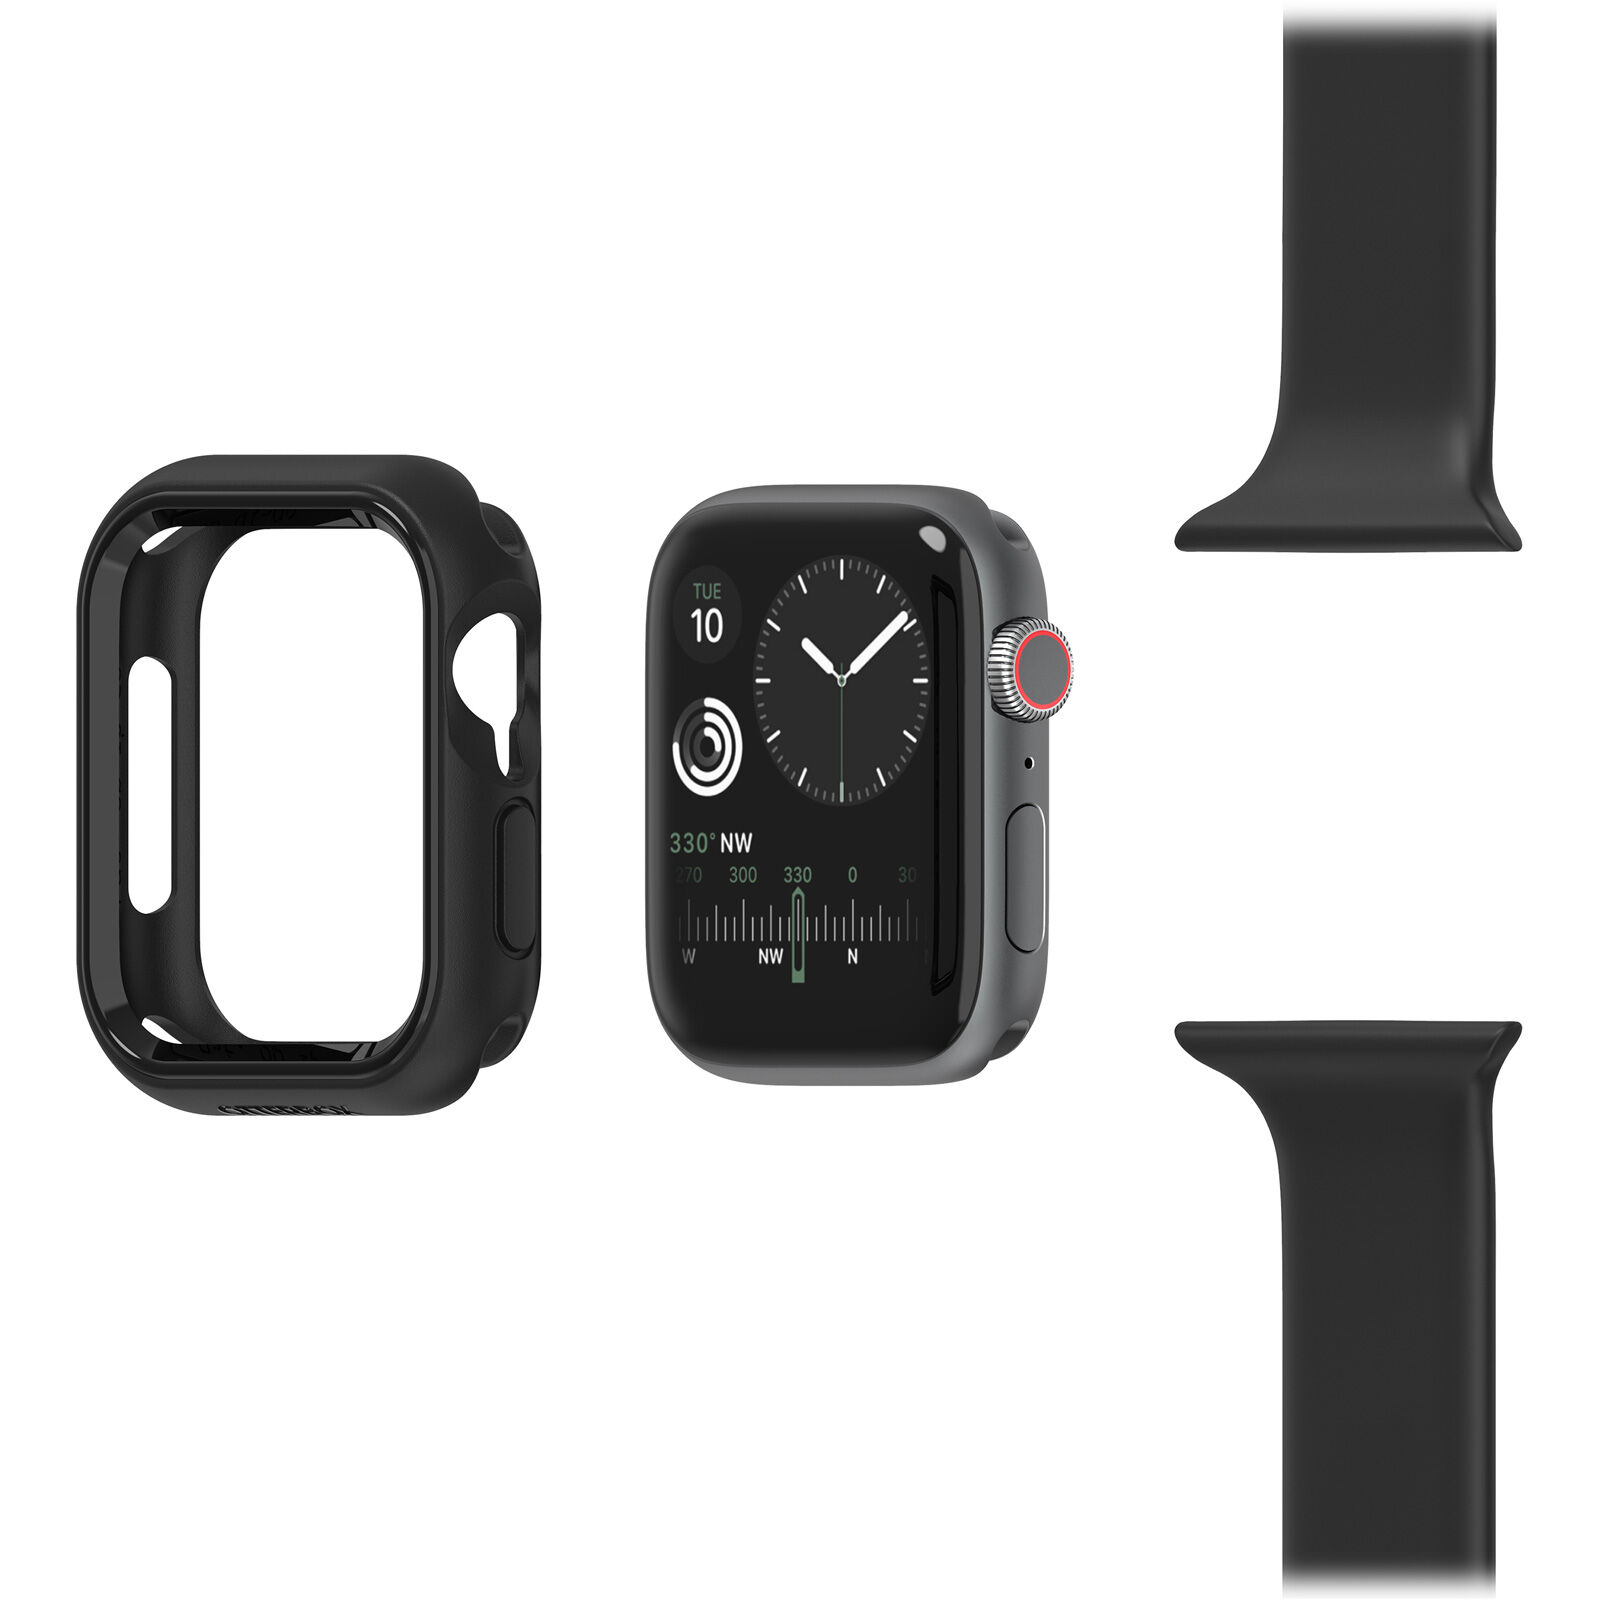 人気新品Apple Watch Series 4 44mm Blk Stainless Apple Watch本体